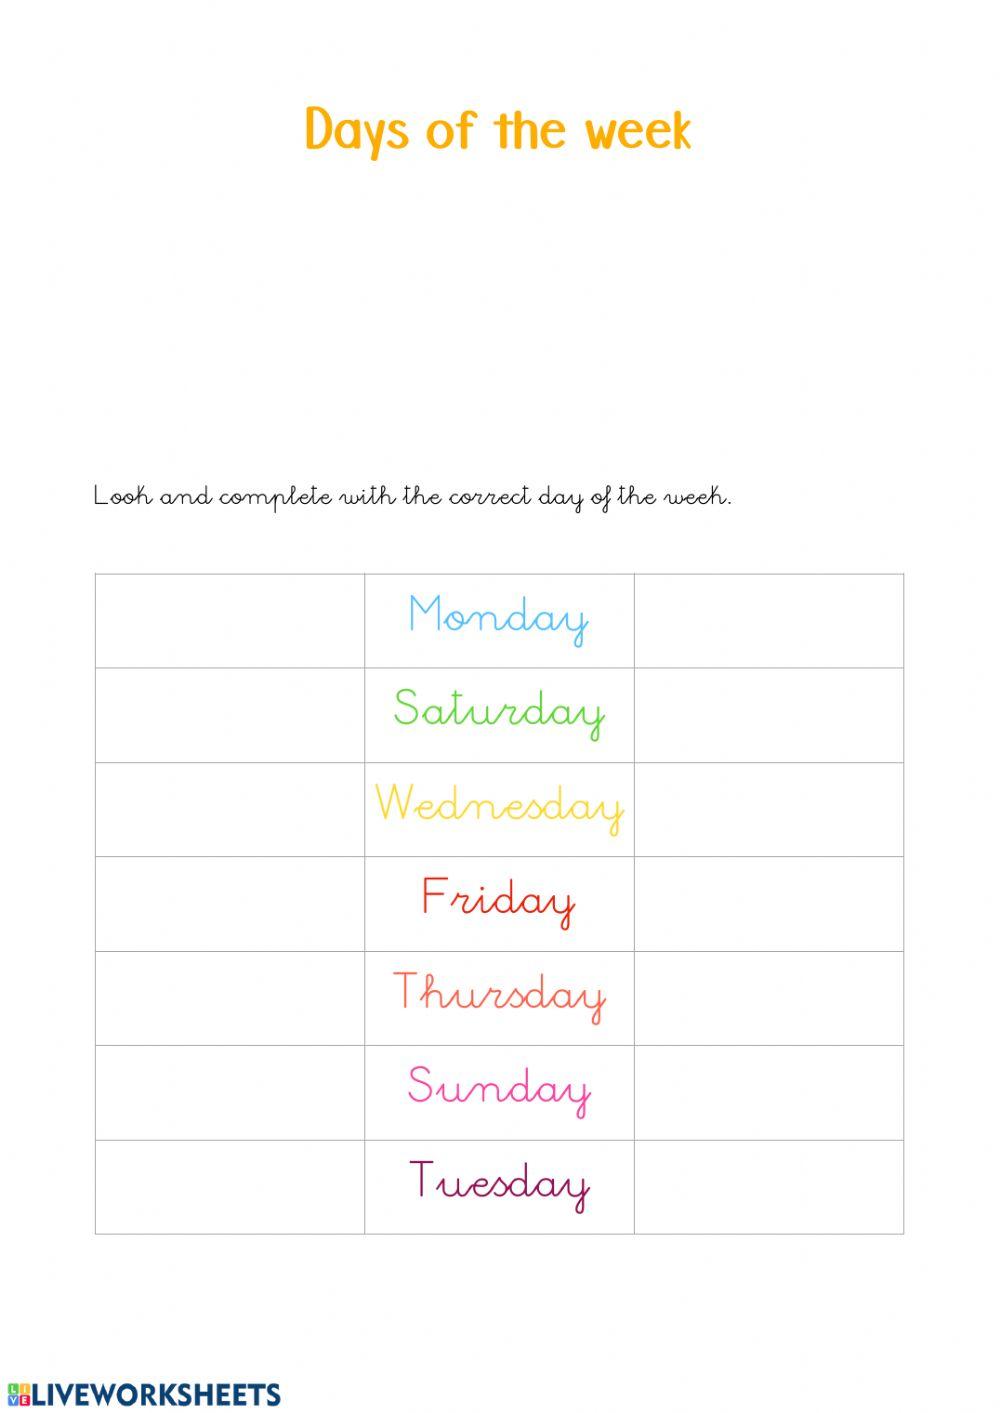 Days of the Week Yesterday and Tomorrow Worksheet / Worksheet